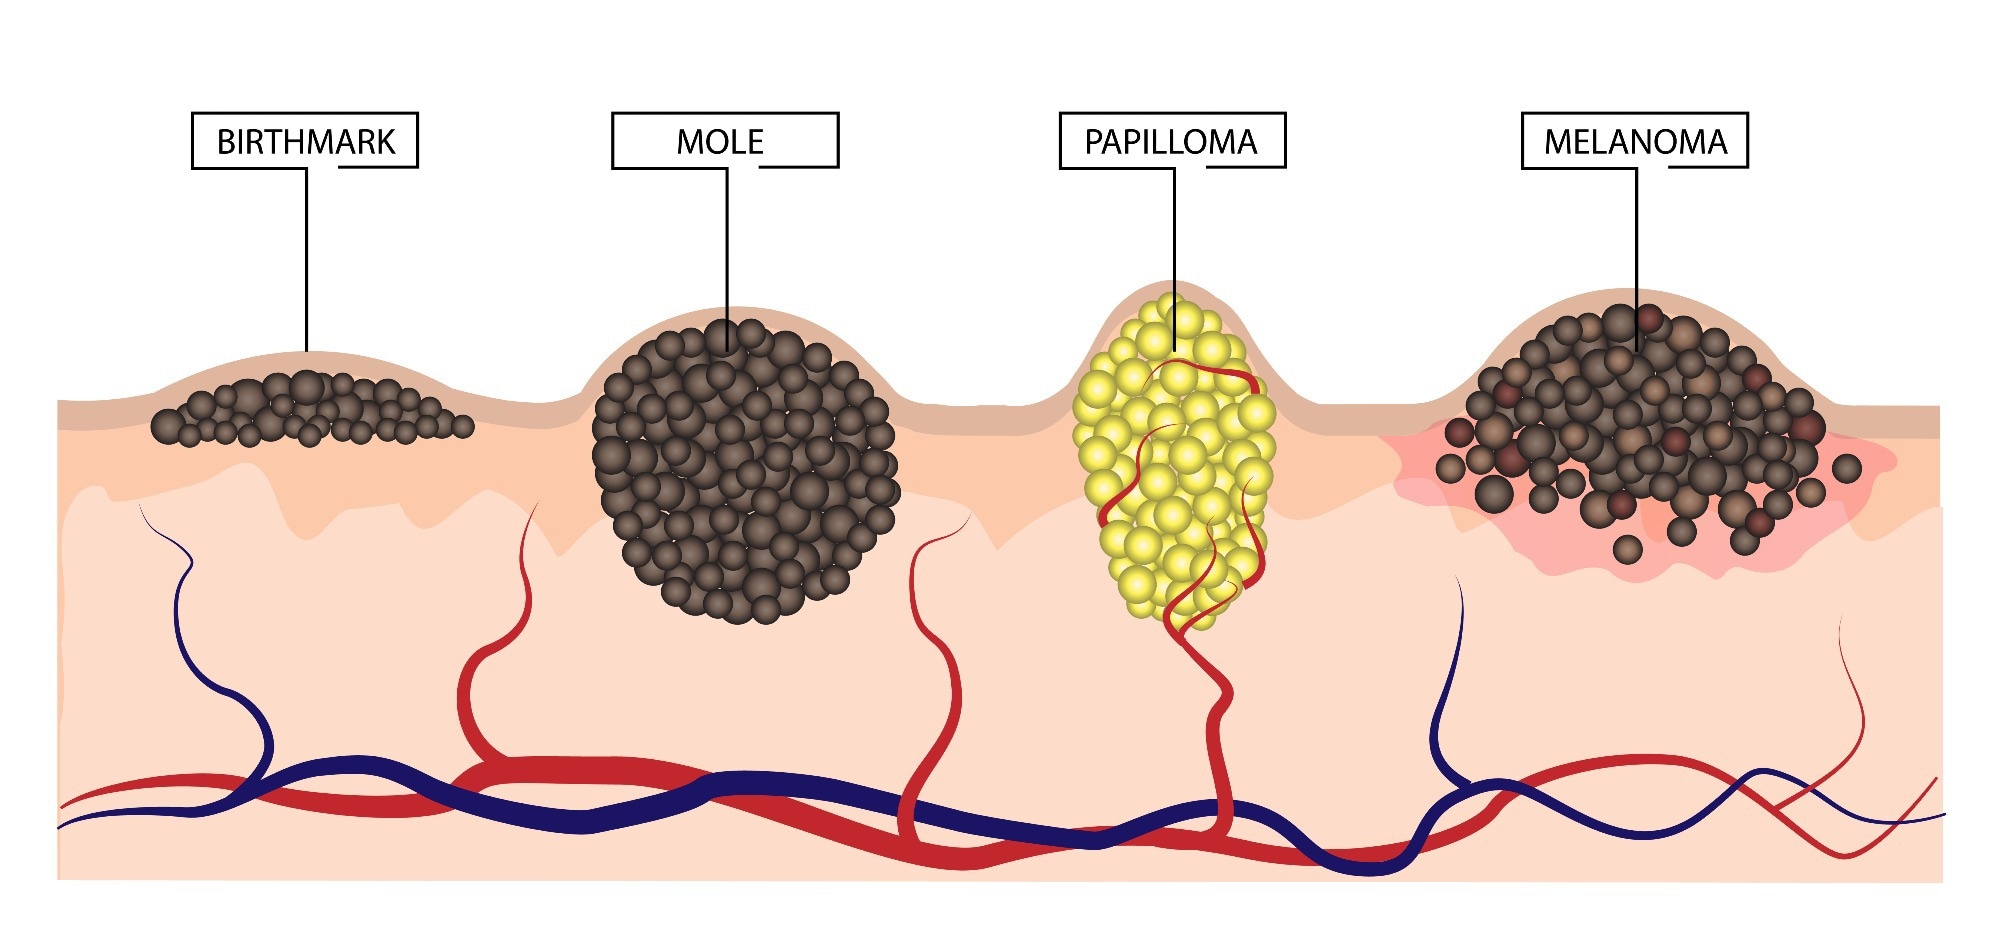 Diagram of birthmark, mole, papilloma and melanoma. Image Credit: LiliiaKyrylenko / Shutterstock